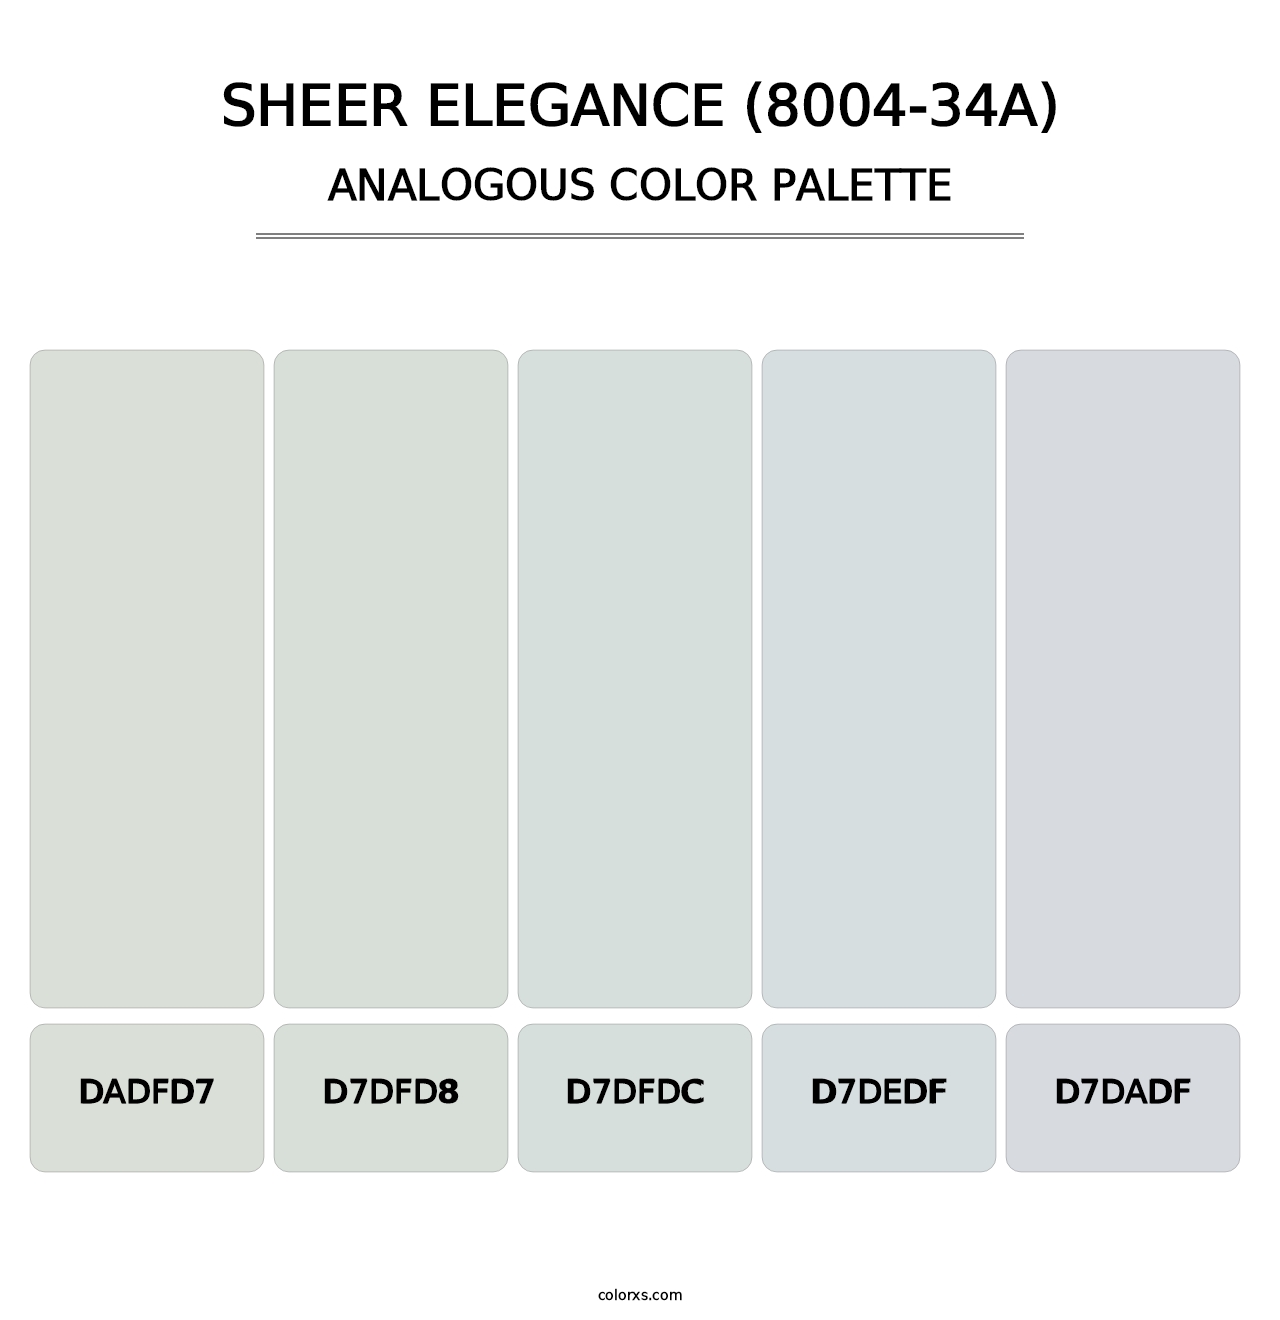 Sheer Elegance (8004-34A) - Analogous Color Palette